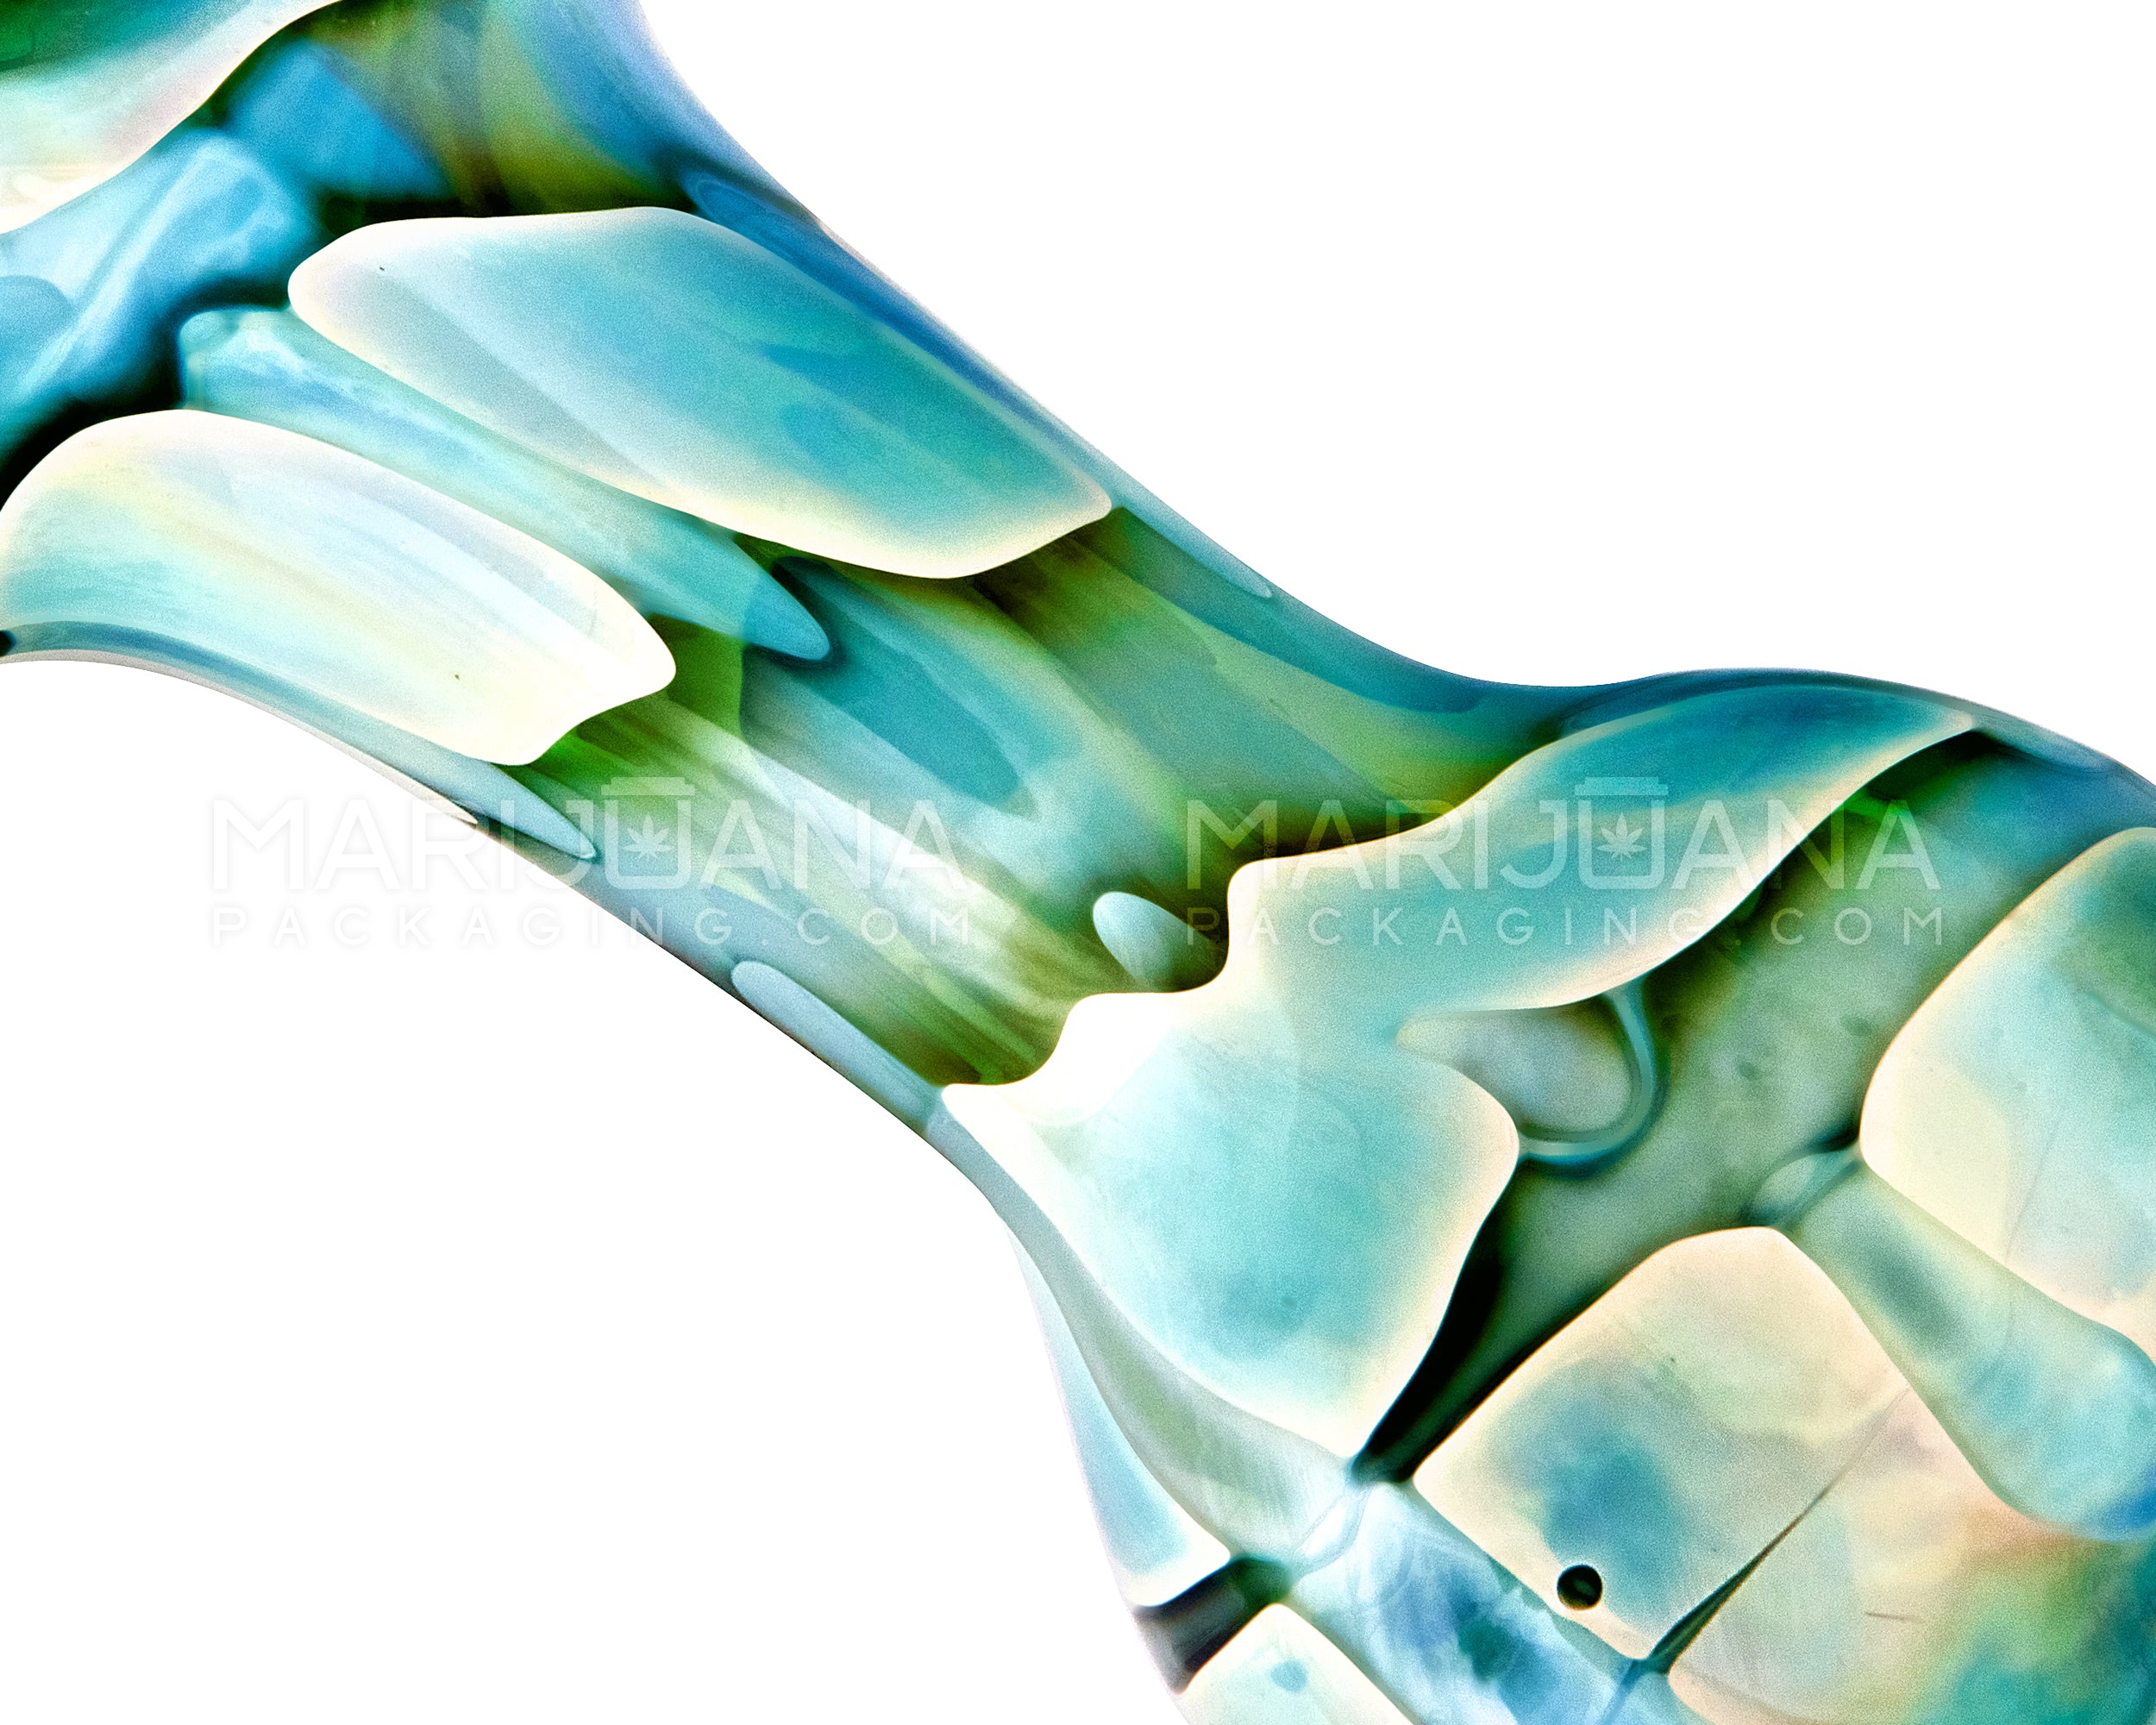 Raked & Print Fumed Spoon Hand Pipe w/ Knocker | 3.5in Long - Glass - Assorted - 3